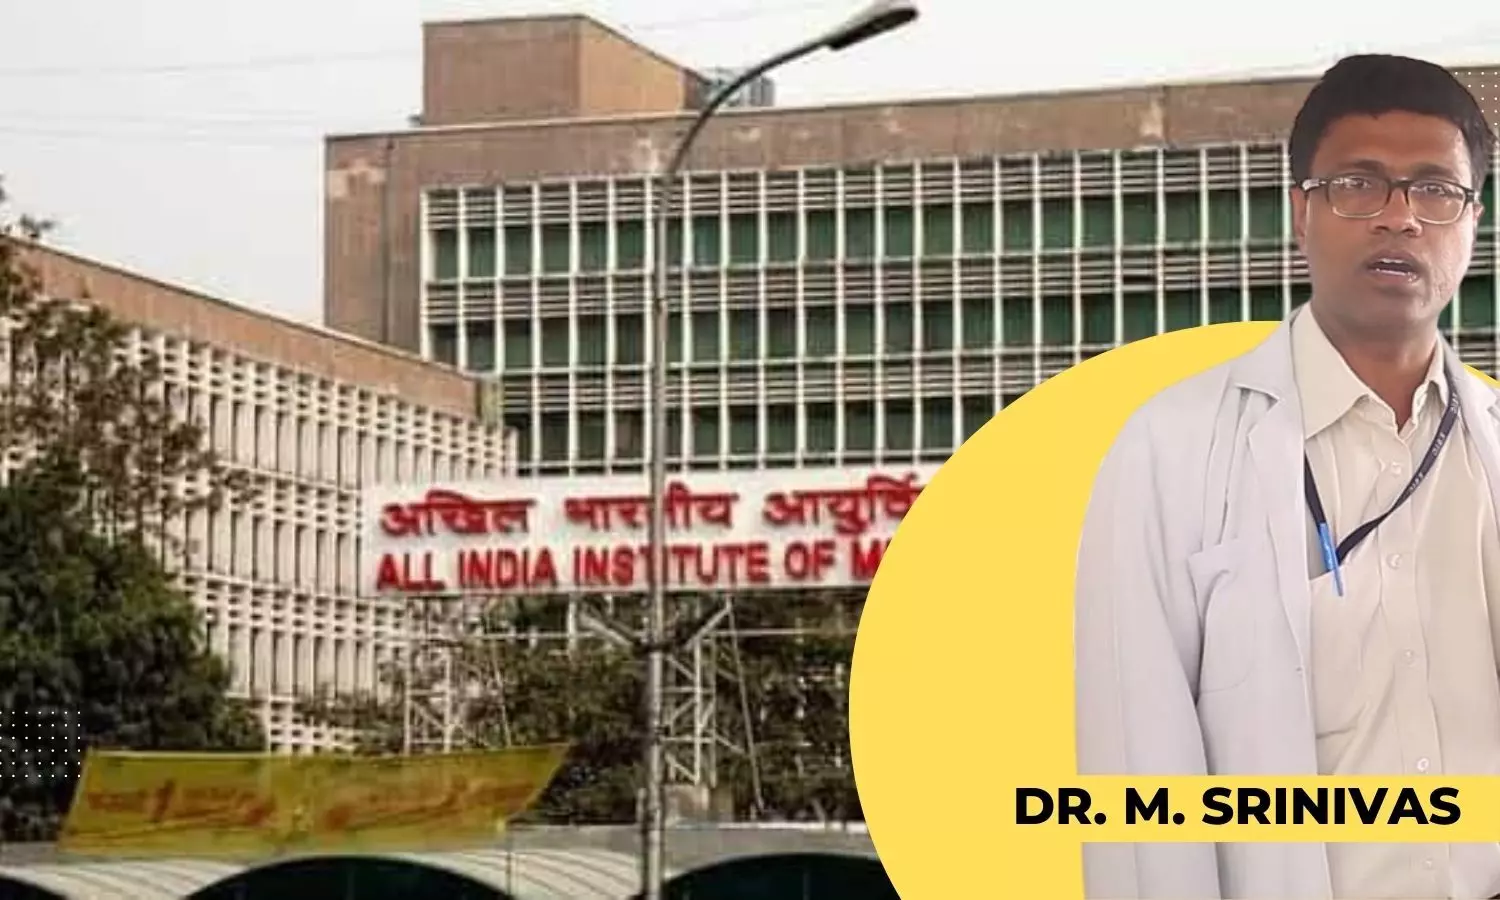 Breaking News: Dr M Srinivas, Dean of ESIC Hyderabad, appointed Director of AIIMS Delhi